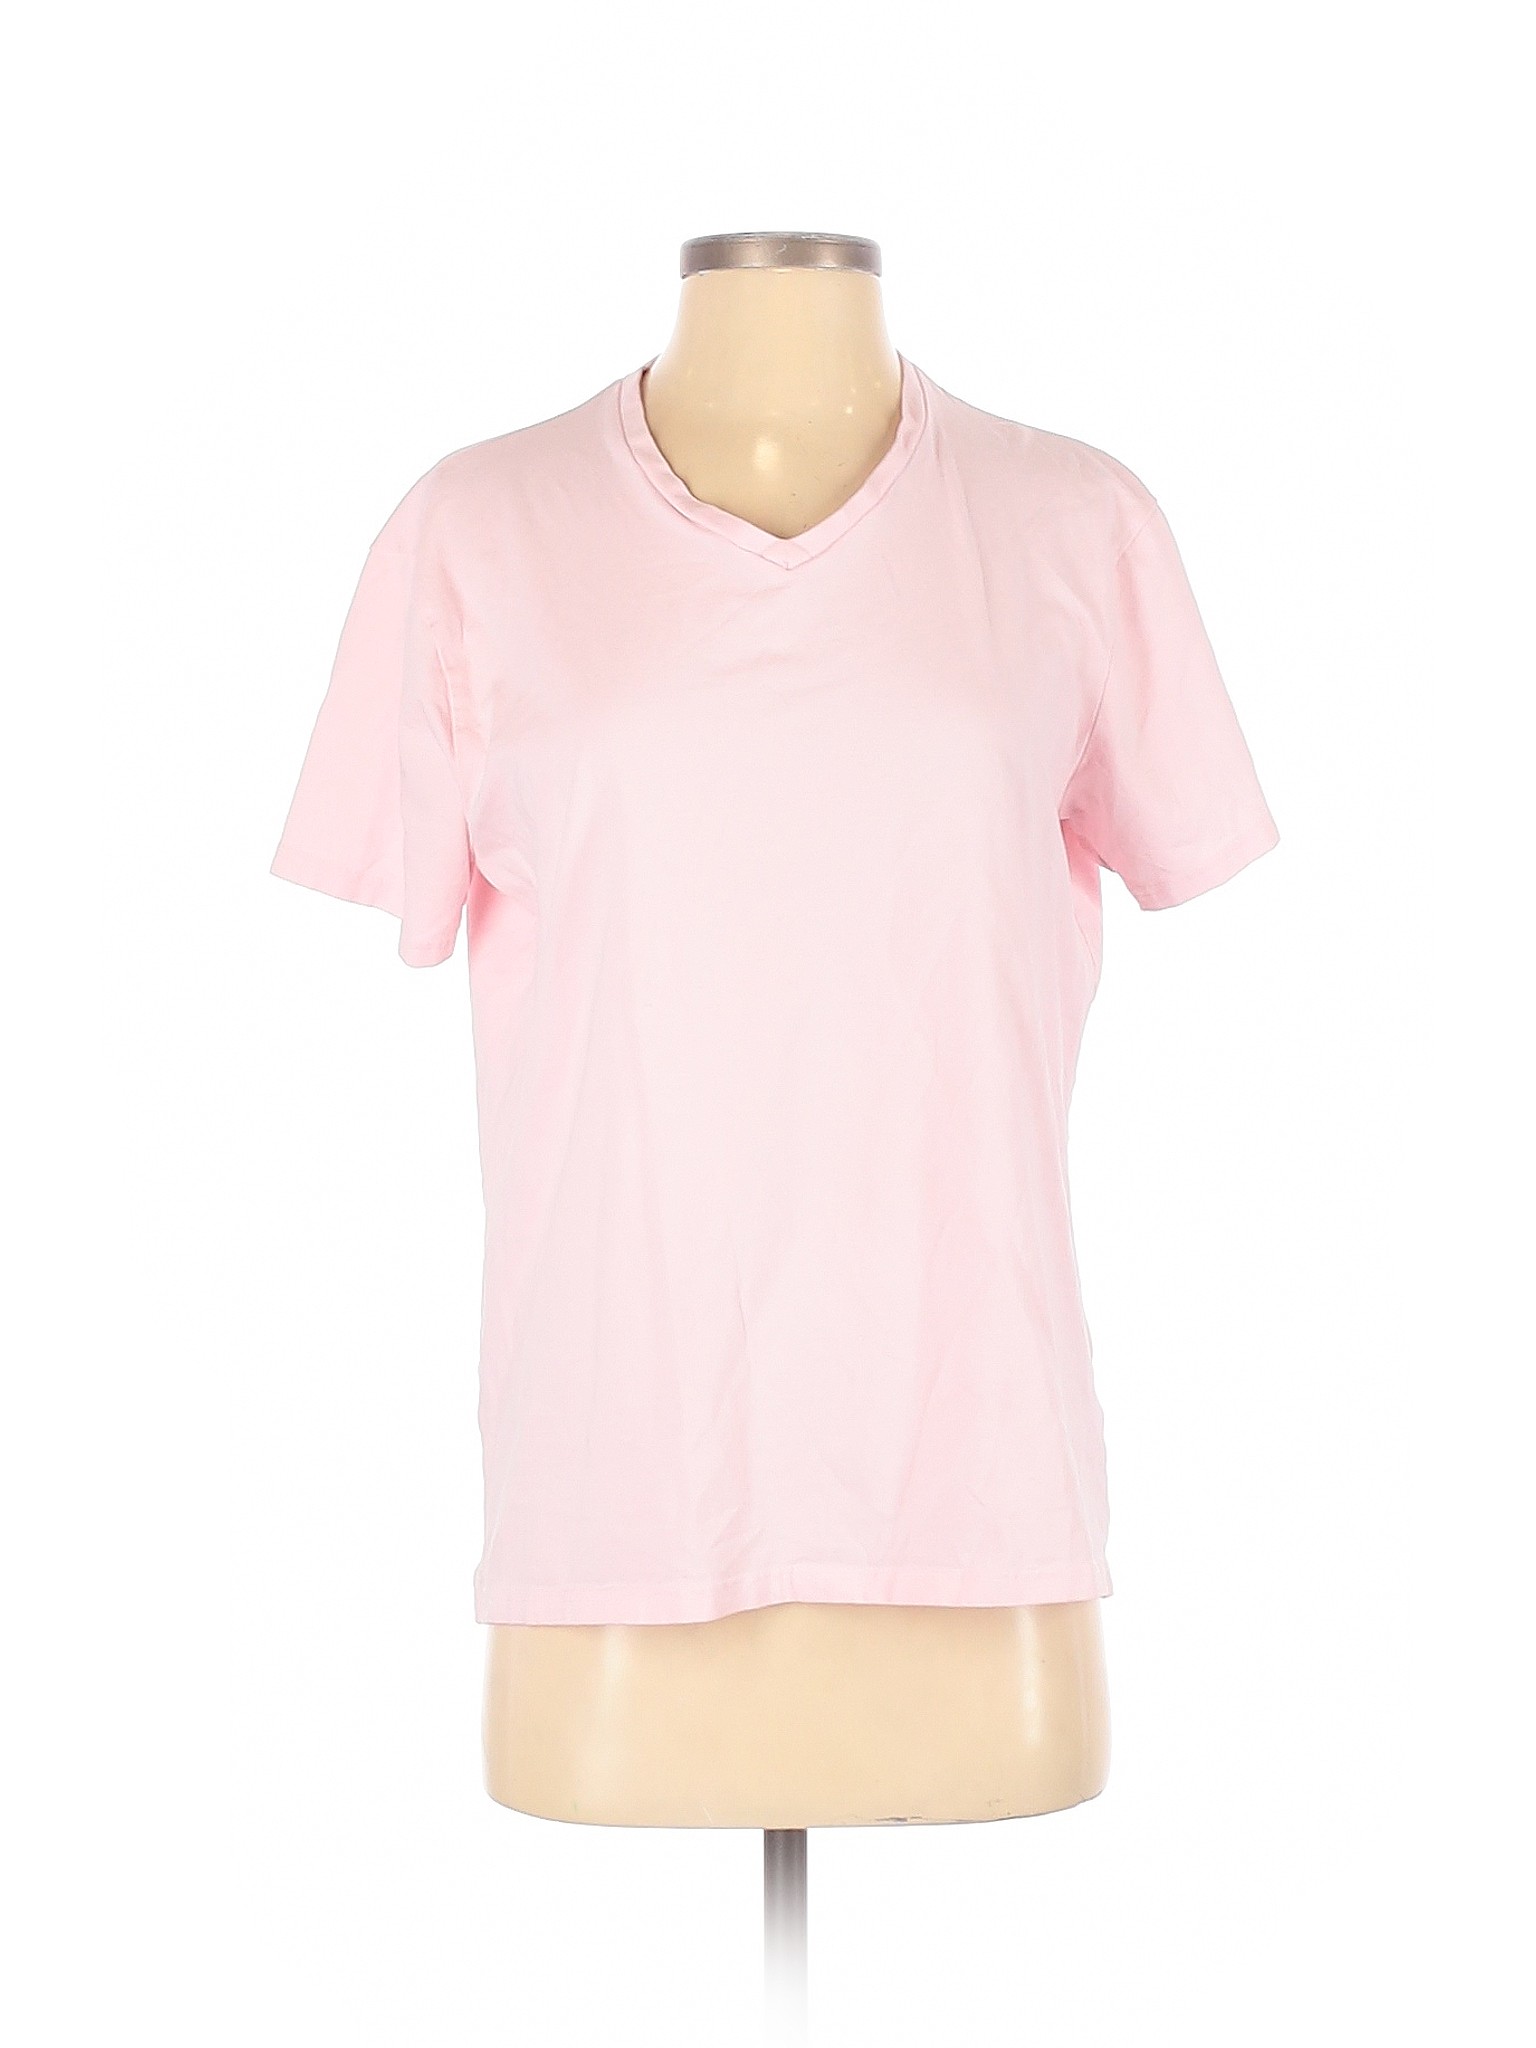 Projek Raw Women Pink Short Sleeve T-Shirt M | eBay